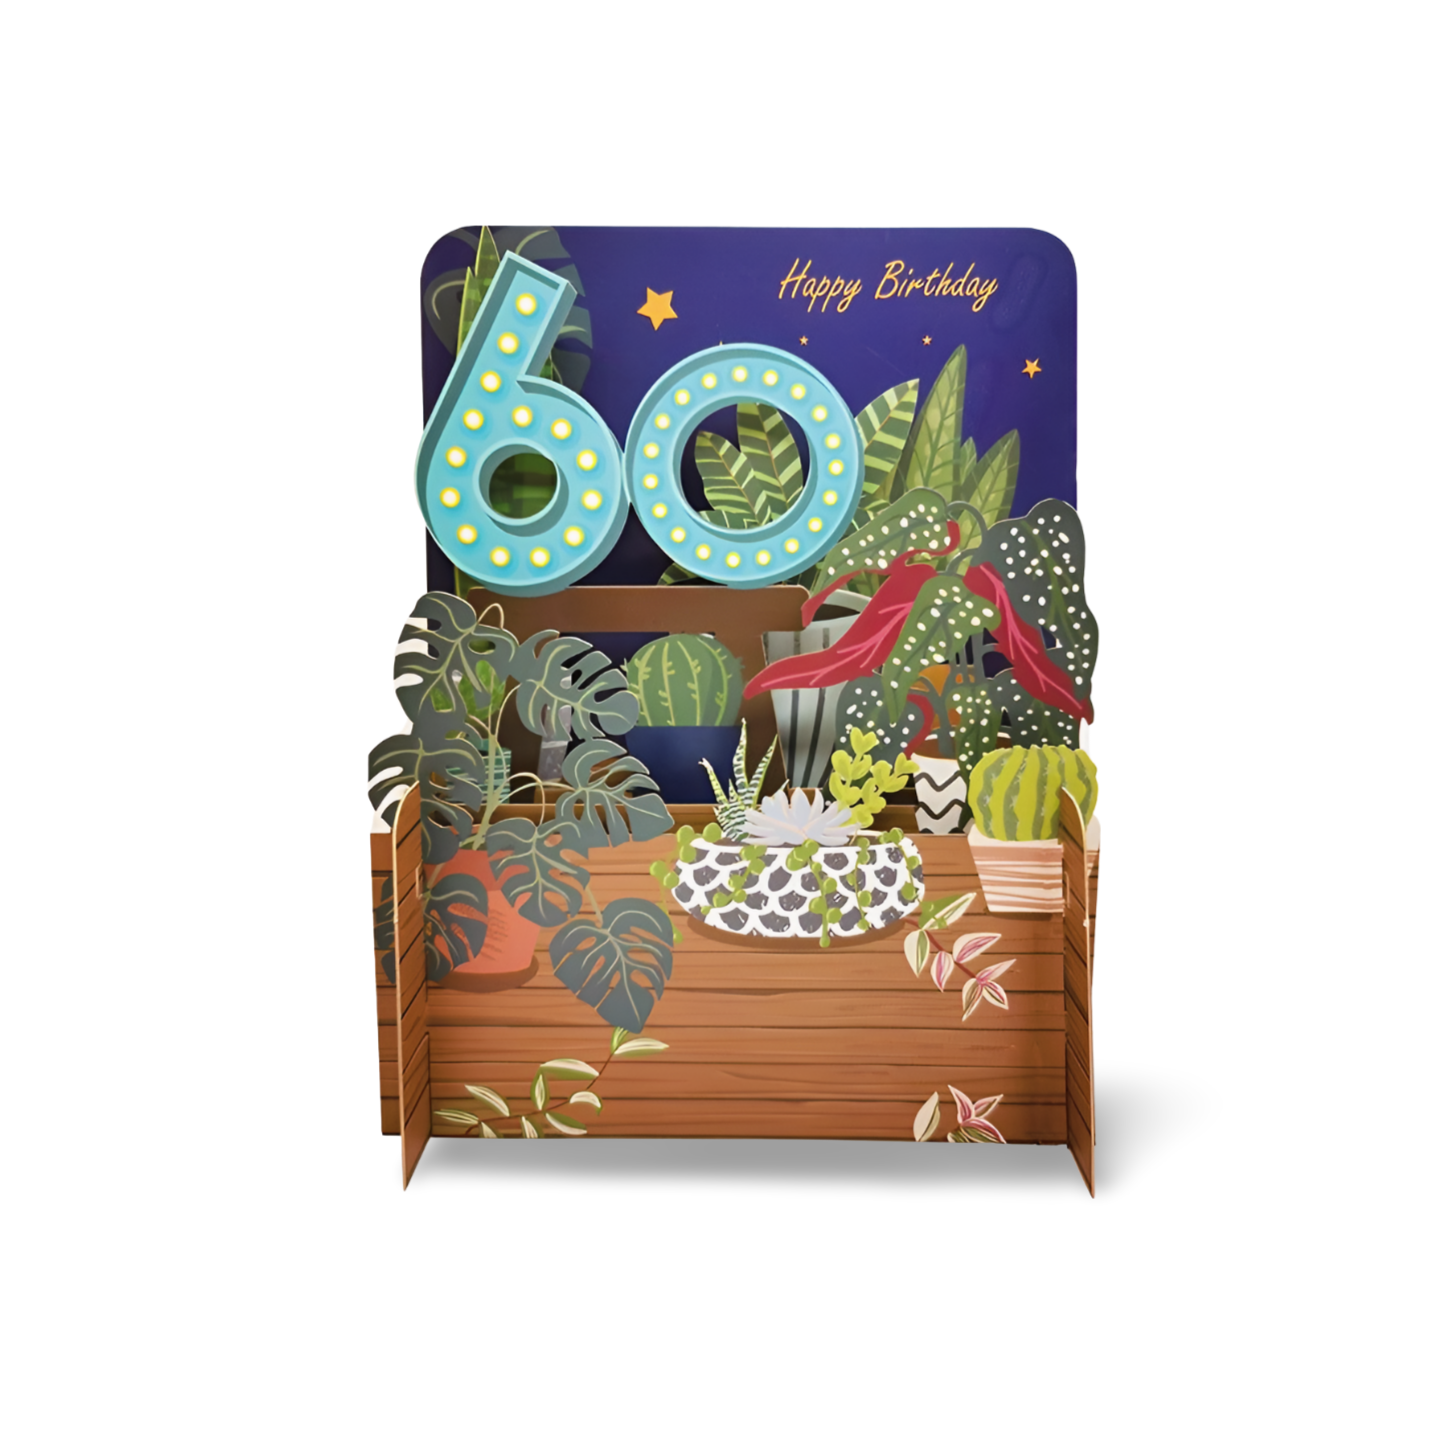 Happy 60th Birthday Botanical Plants 3D Pop Up Greeting Card